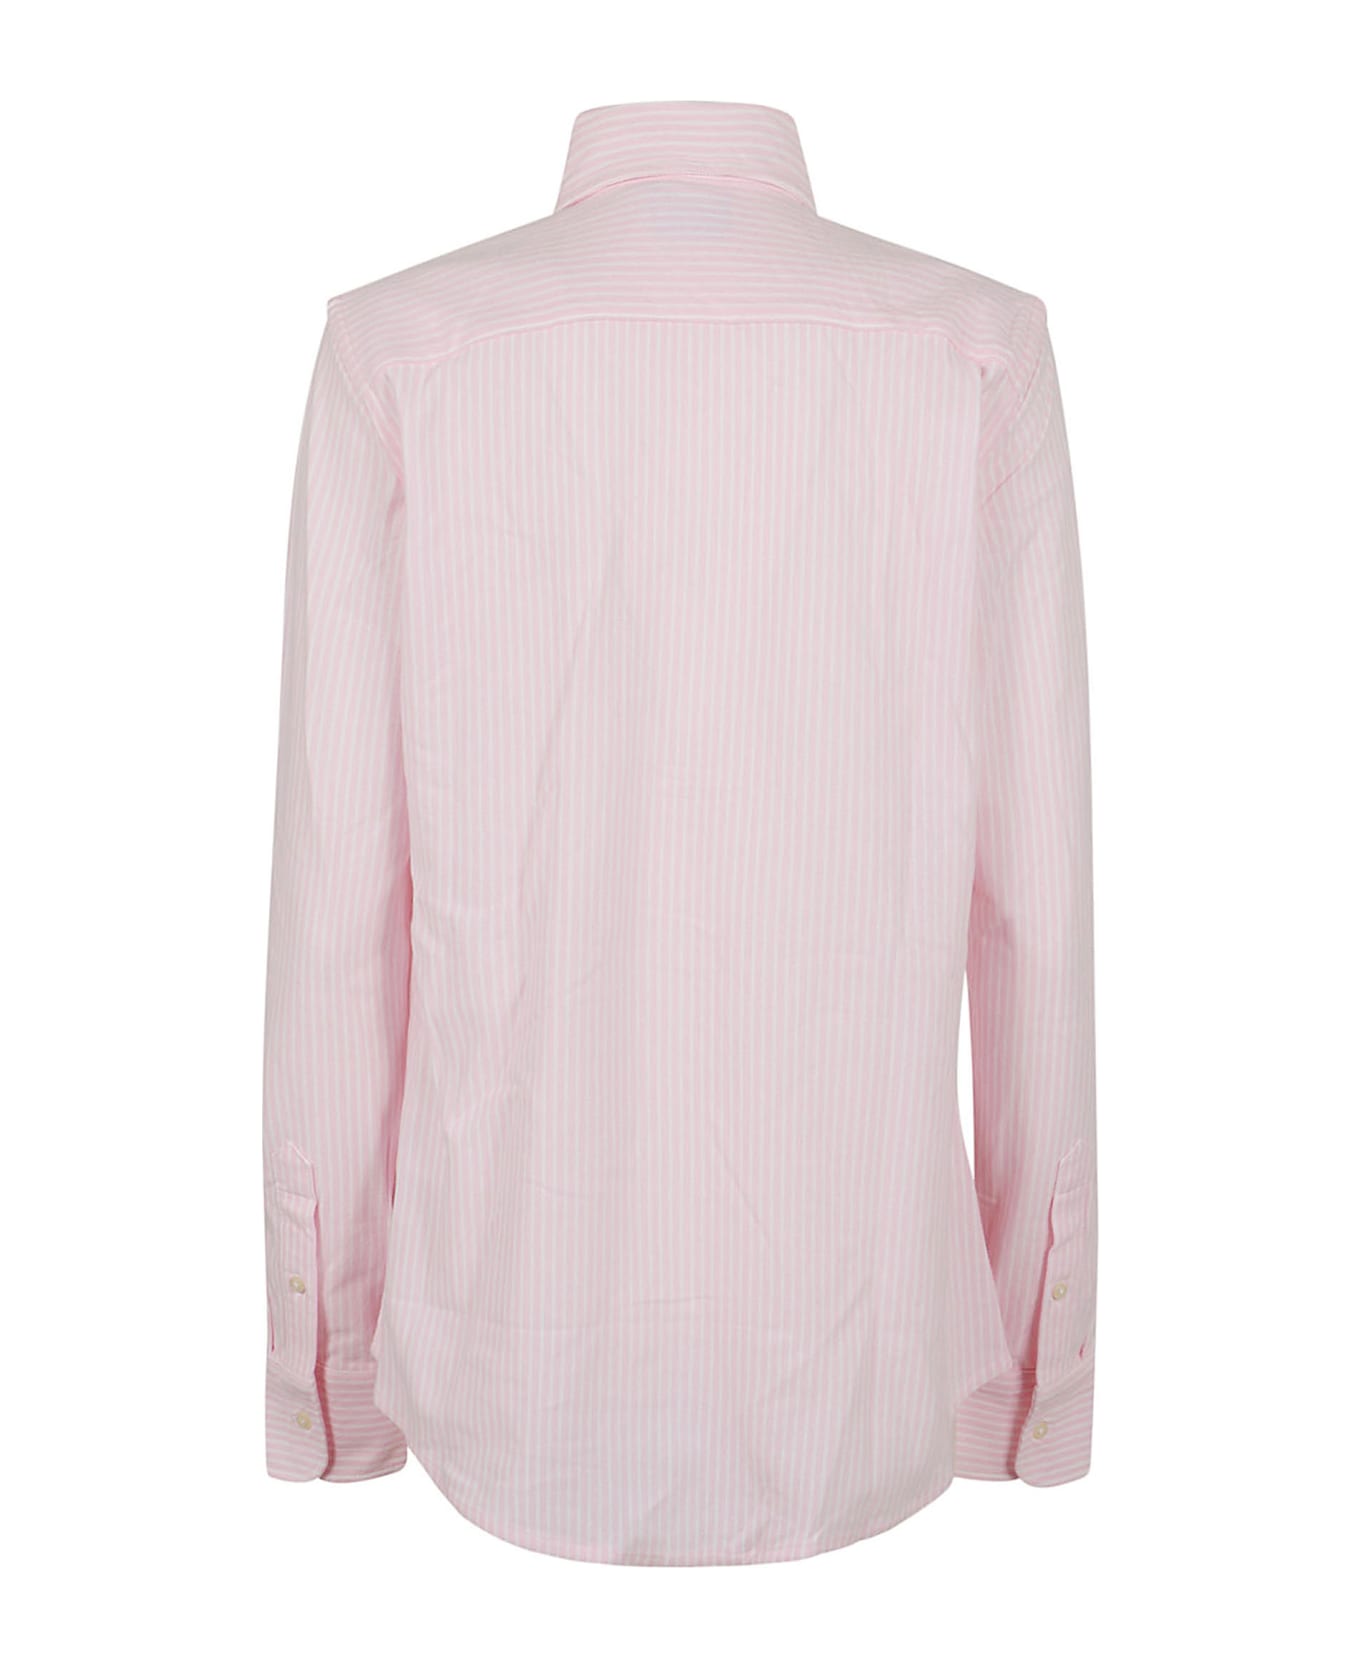 Polo Ralph Lauren Striped Long-sleeved Shirt - Carmel Pink White シャツ